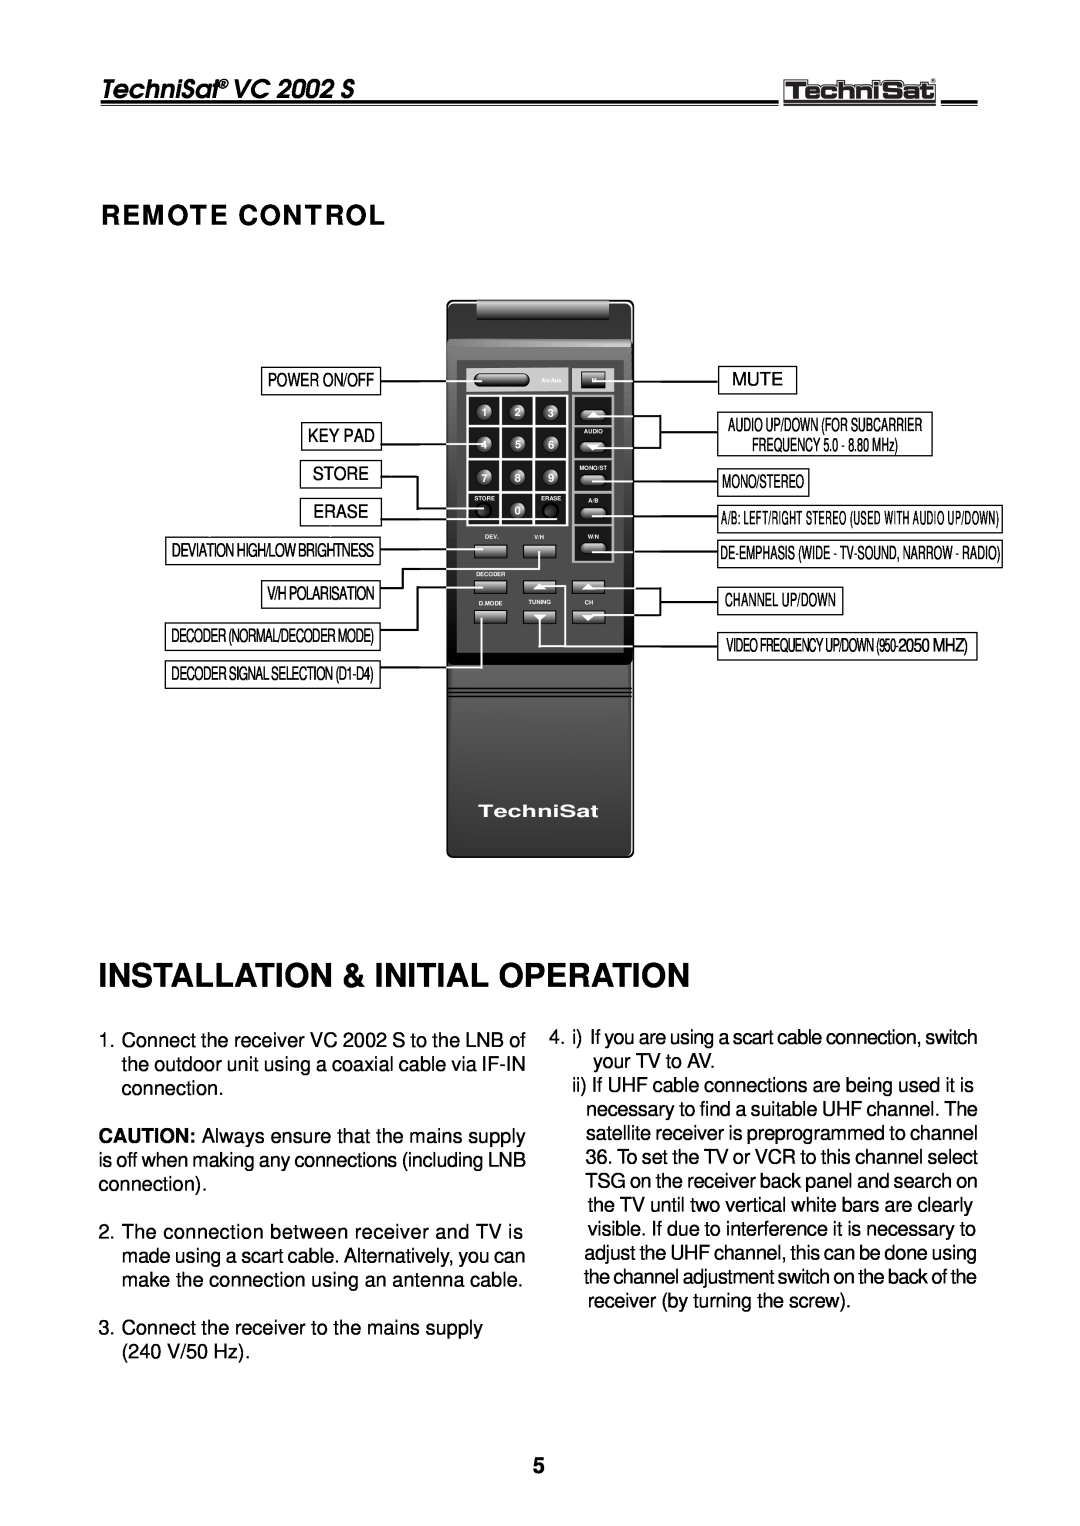 TechniSat manual Installation & Initial Operation, Remote Control, TechniSat VC 2002 S 